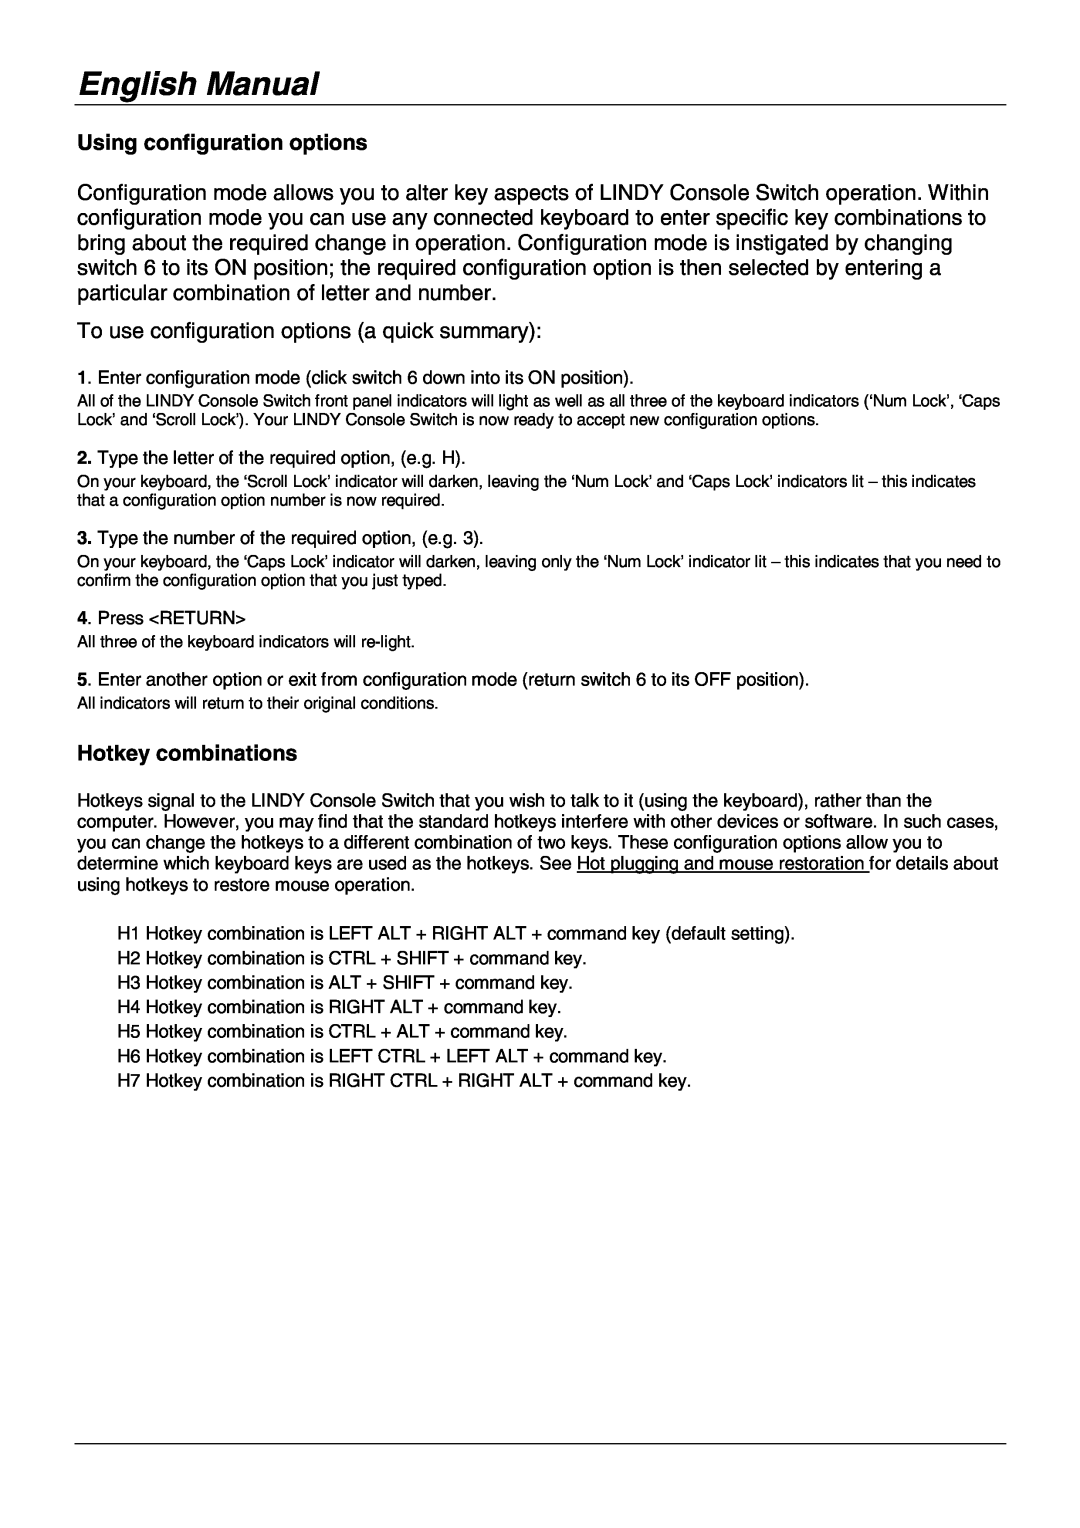 Lindy No. 39123 user manual Using configuration options, Hotkey combinations, English Manual 